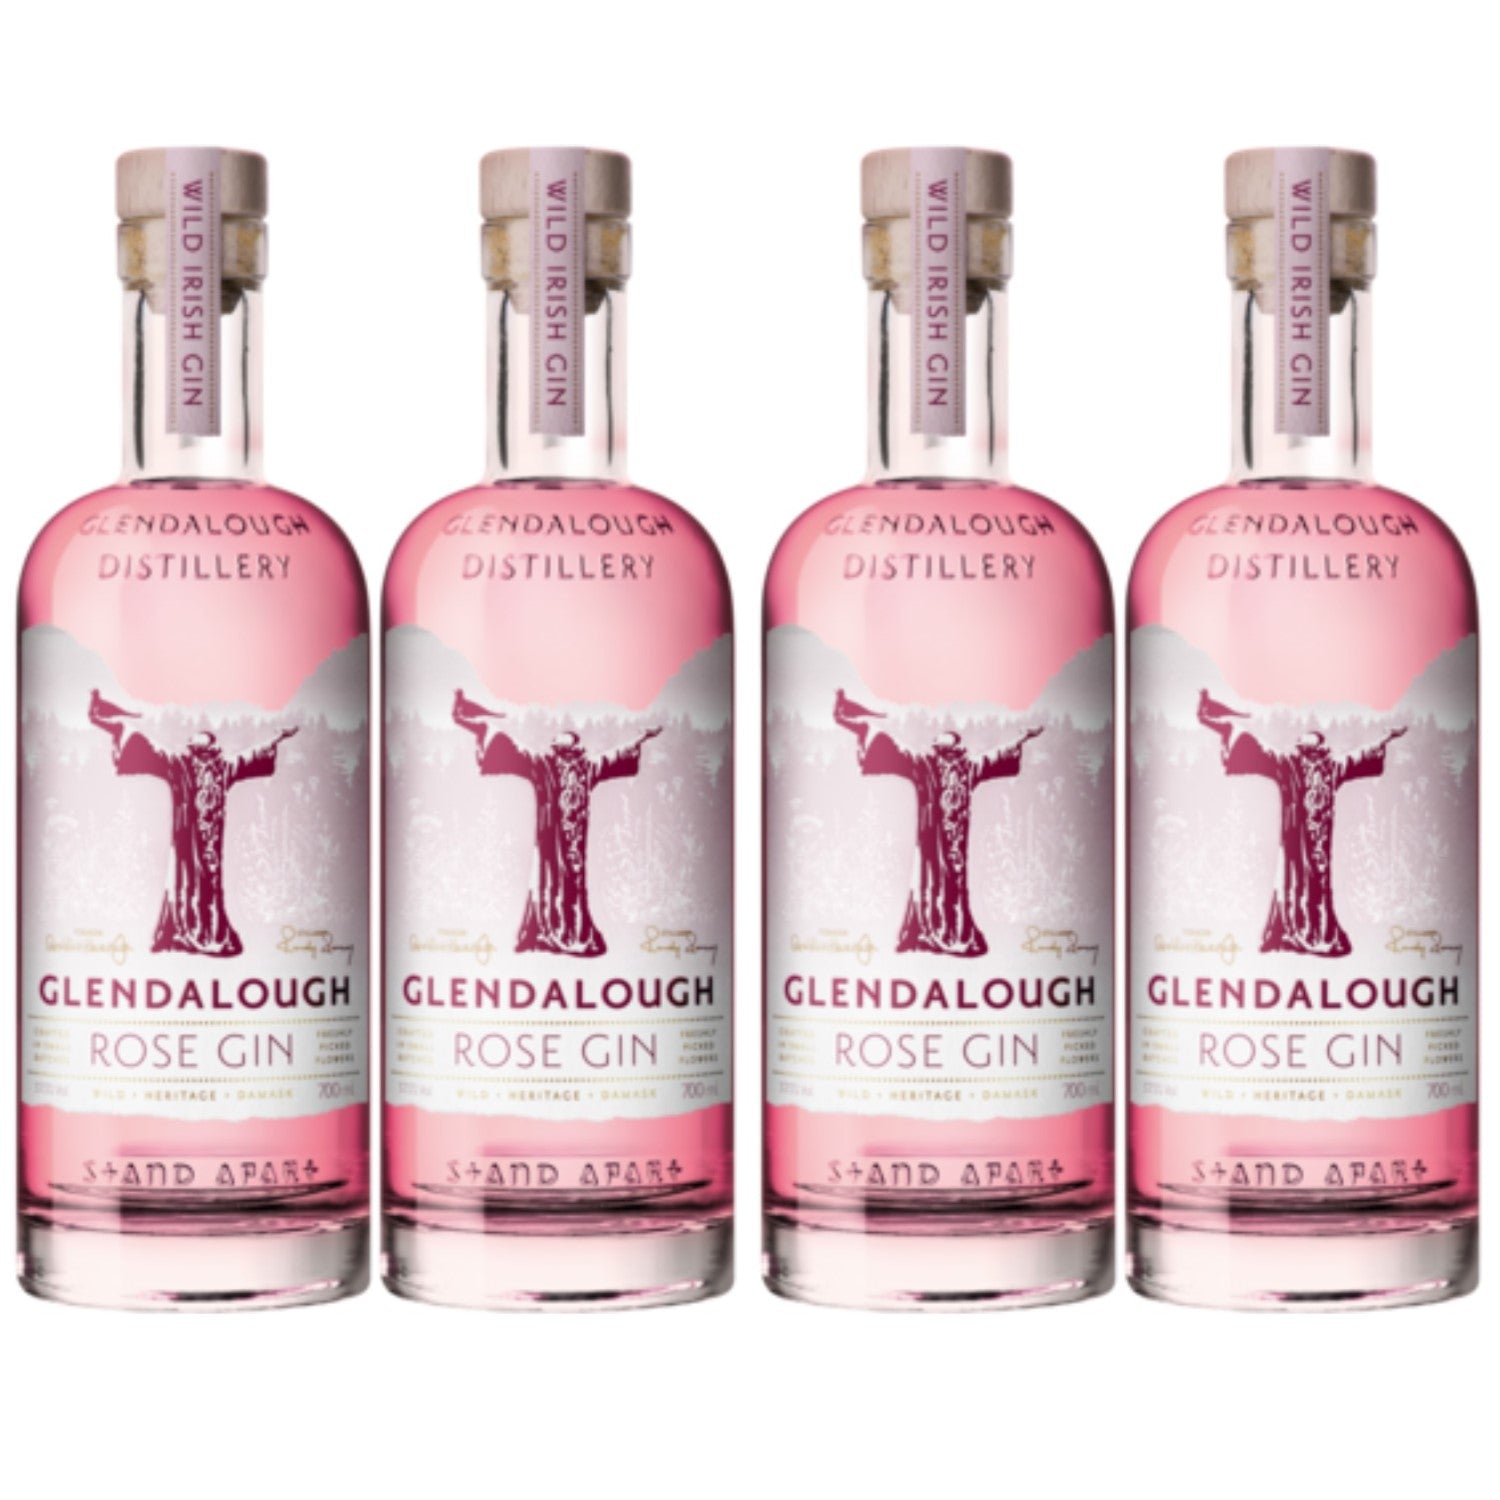 Glendalough Wild Rosé Gin Irland (4 x 0.7l) - Versanel -